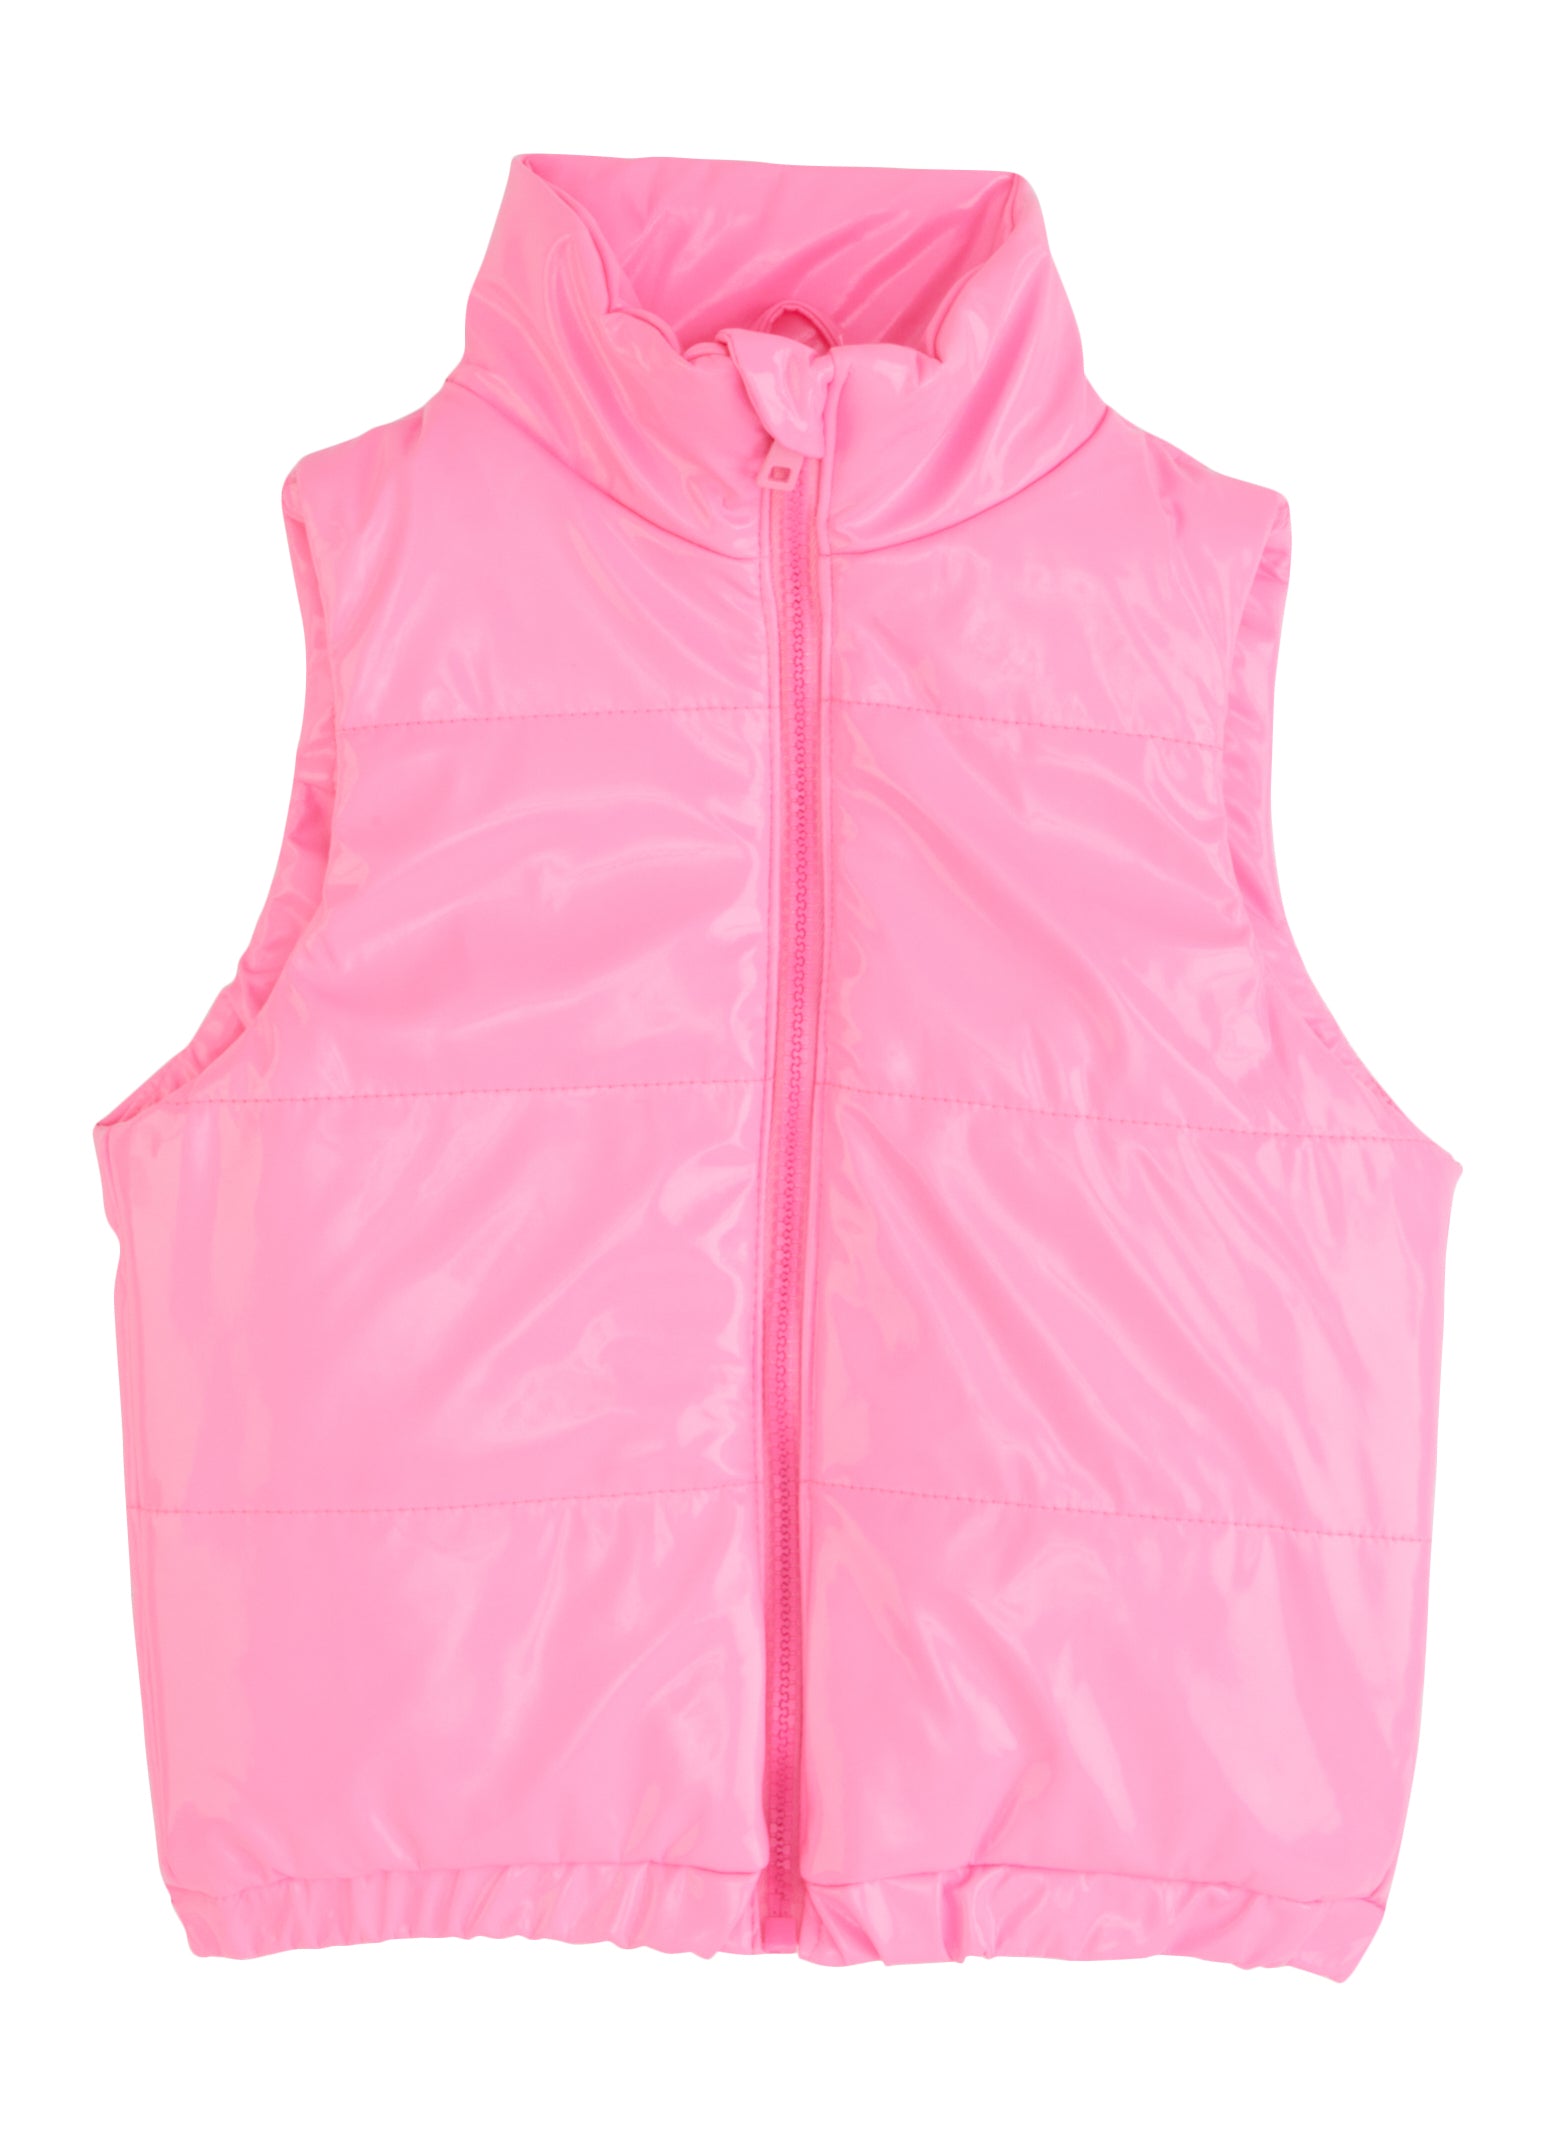 Hot Pink Leather Vest 